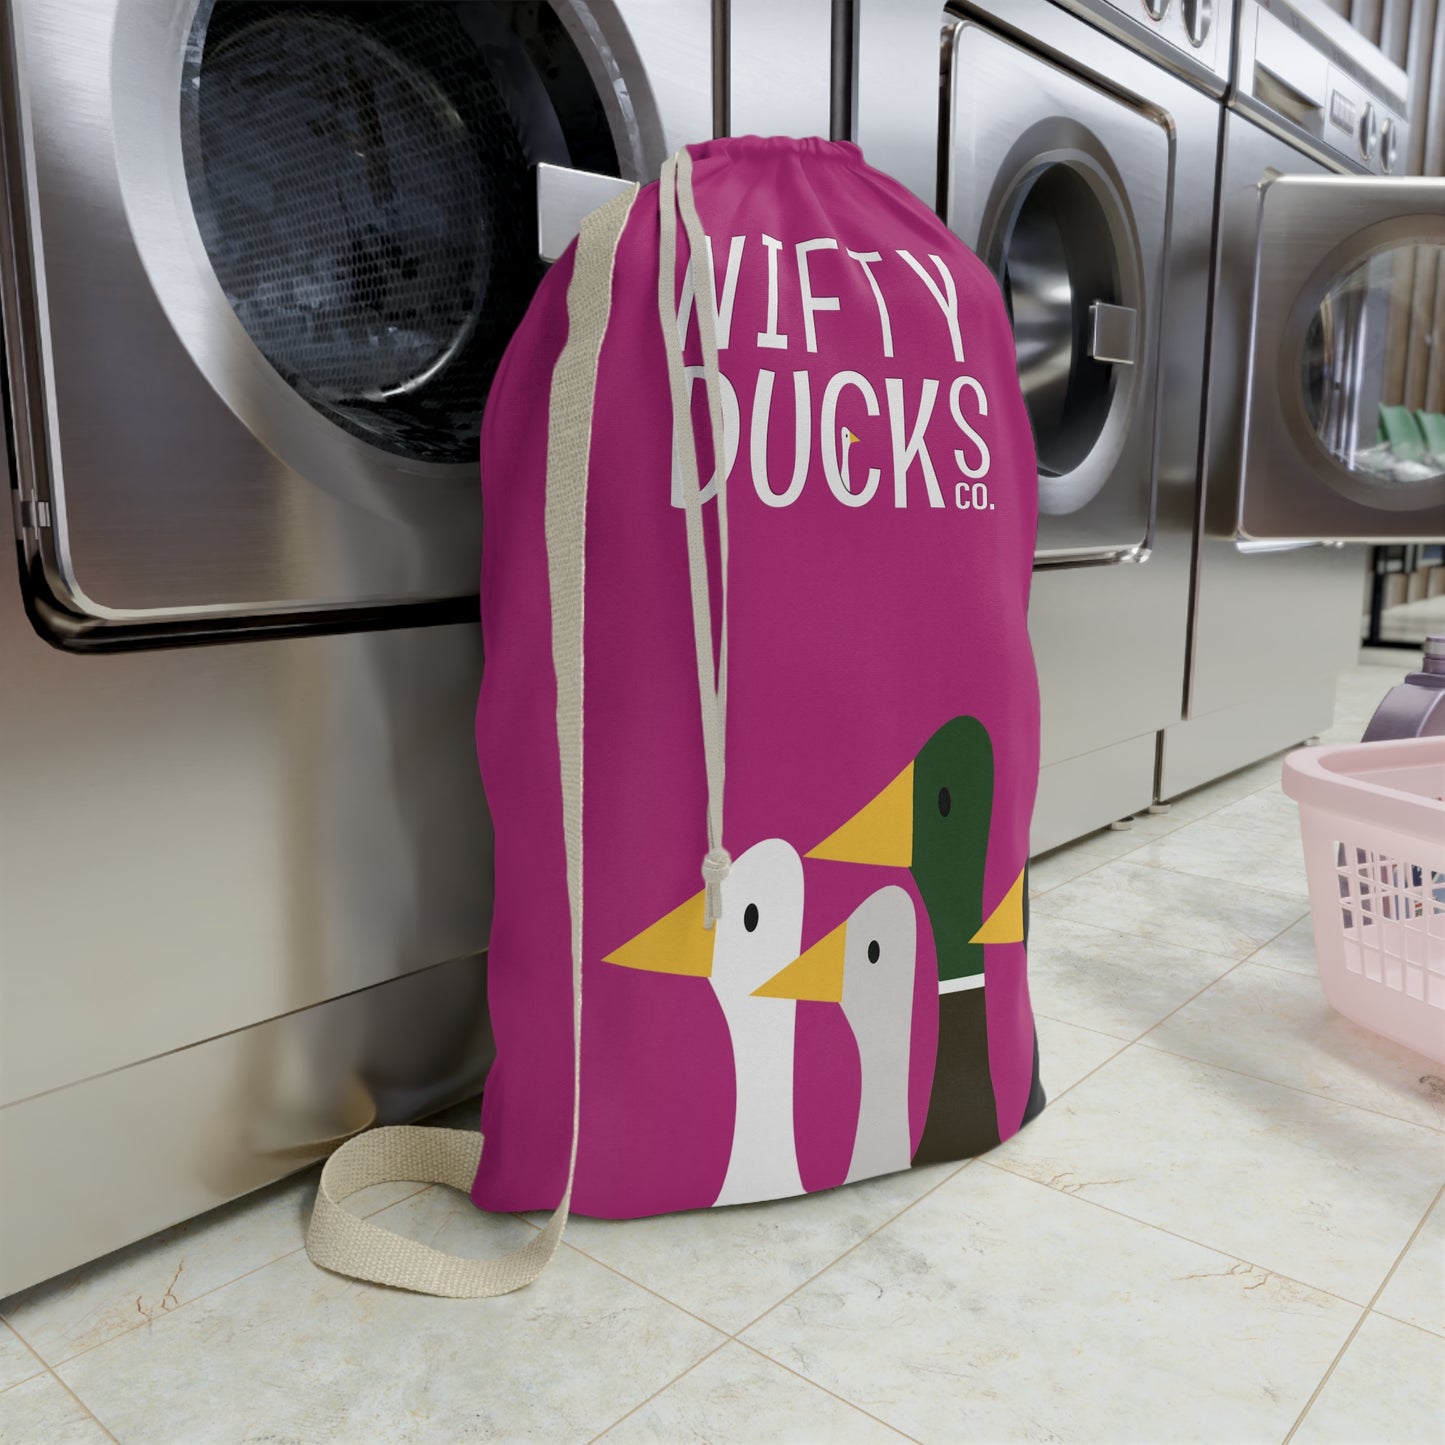 Nifty Ducks Co. Logo2 - Medium Red Violet c42a86 - Laundry Bag